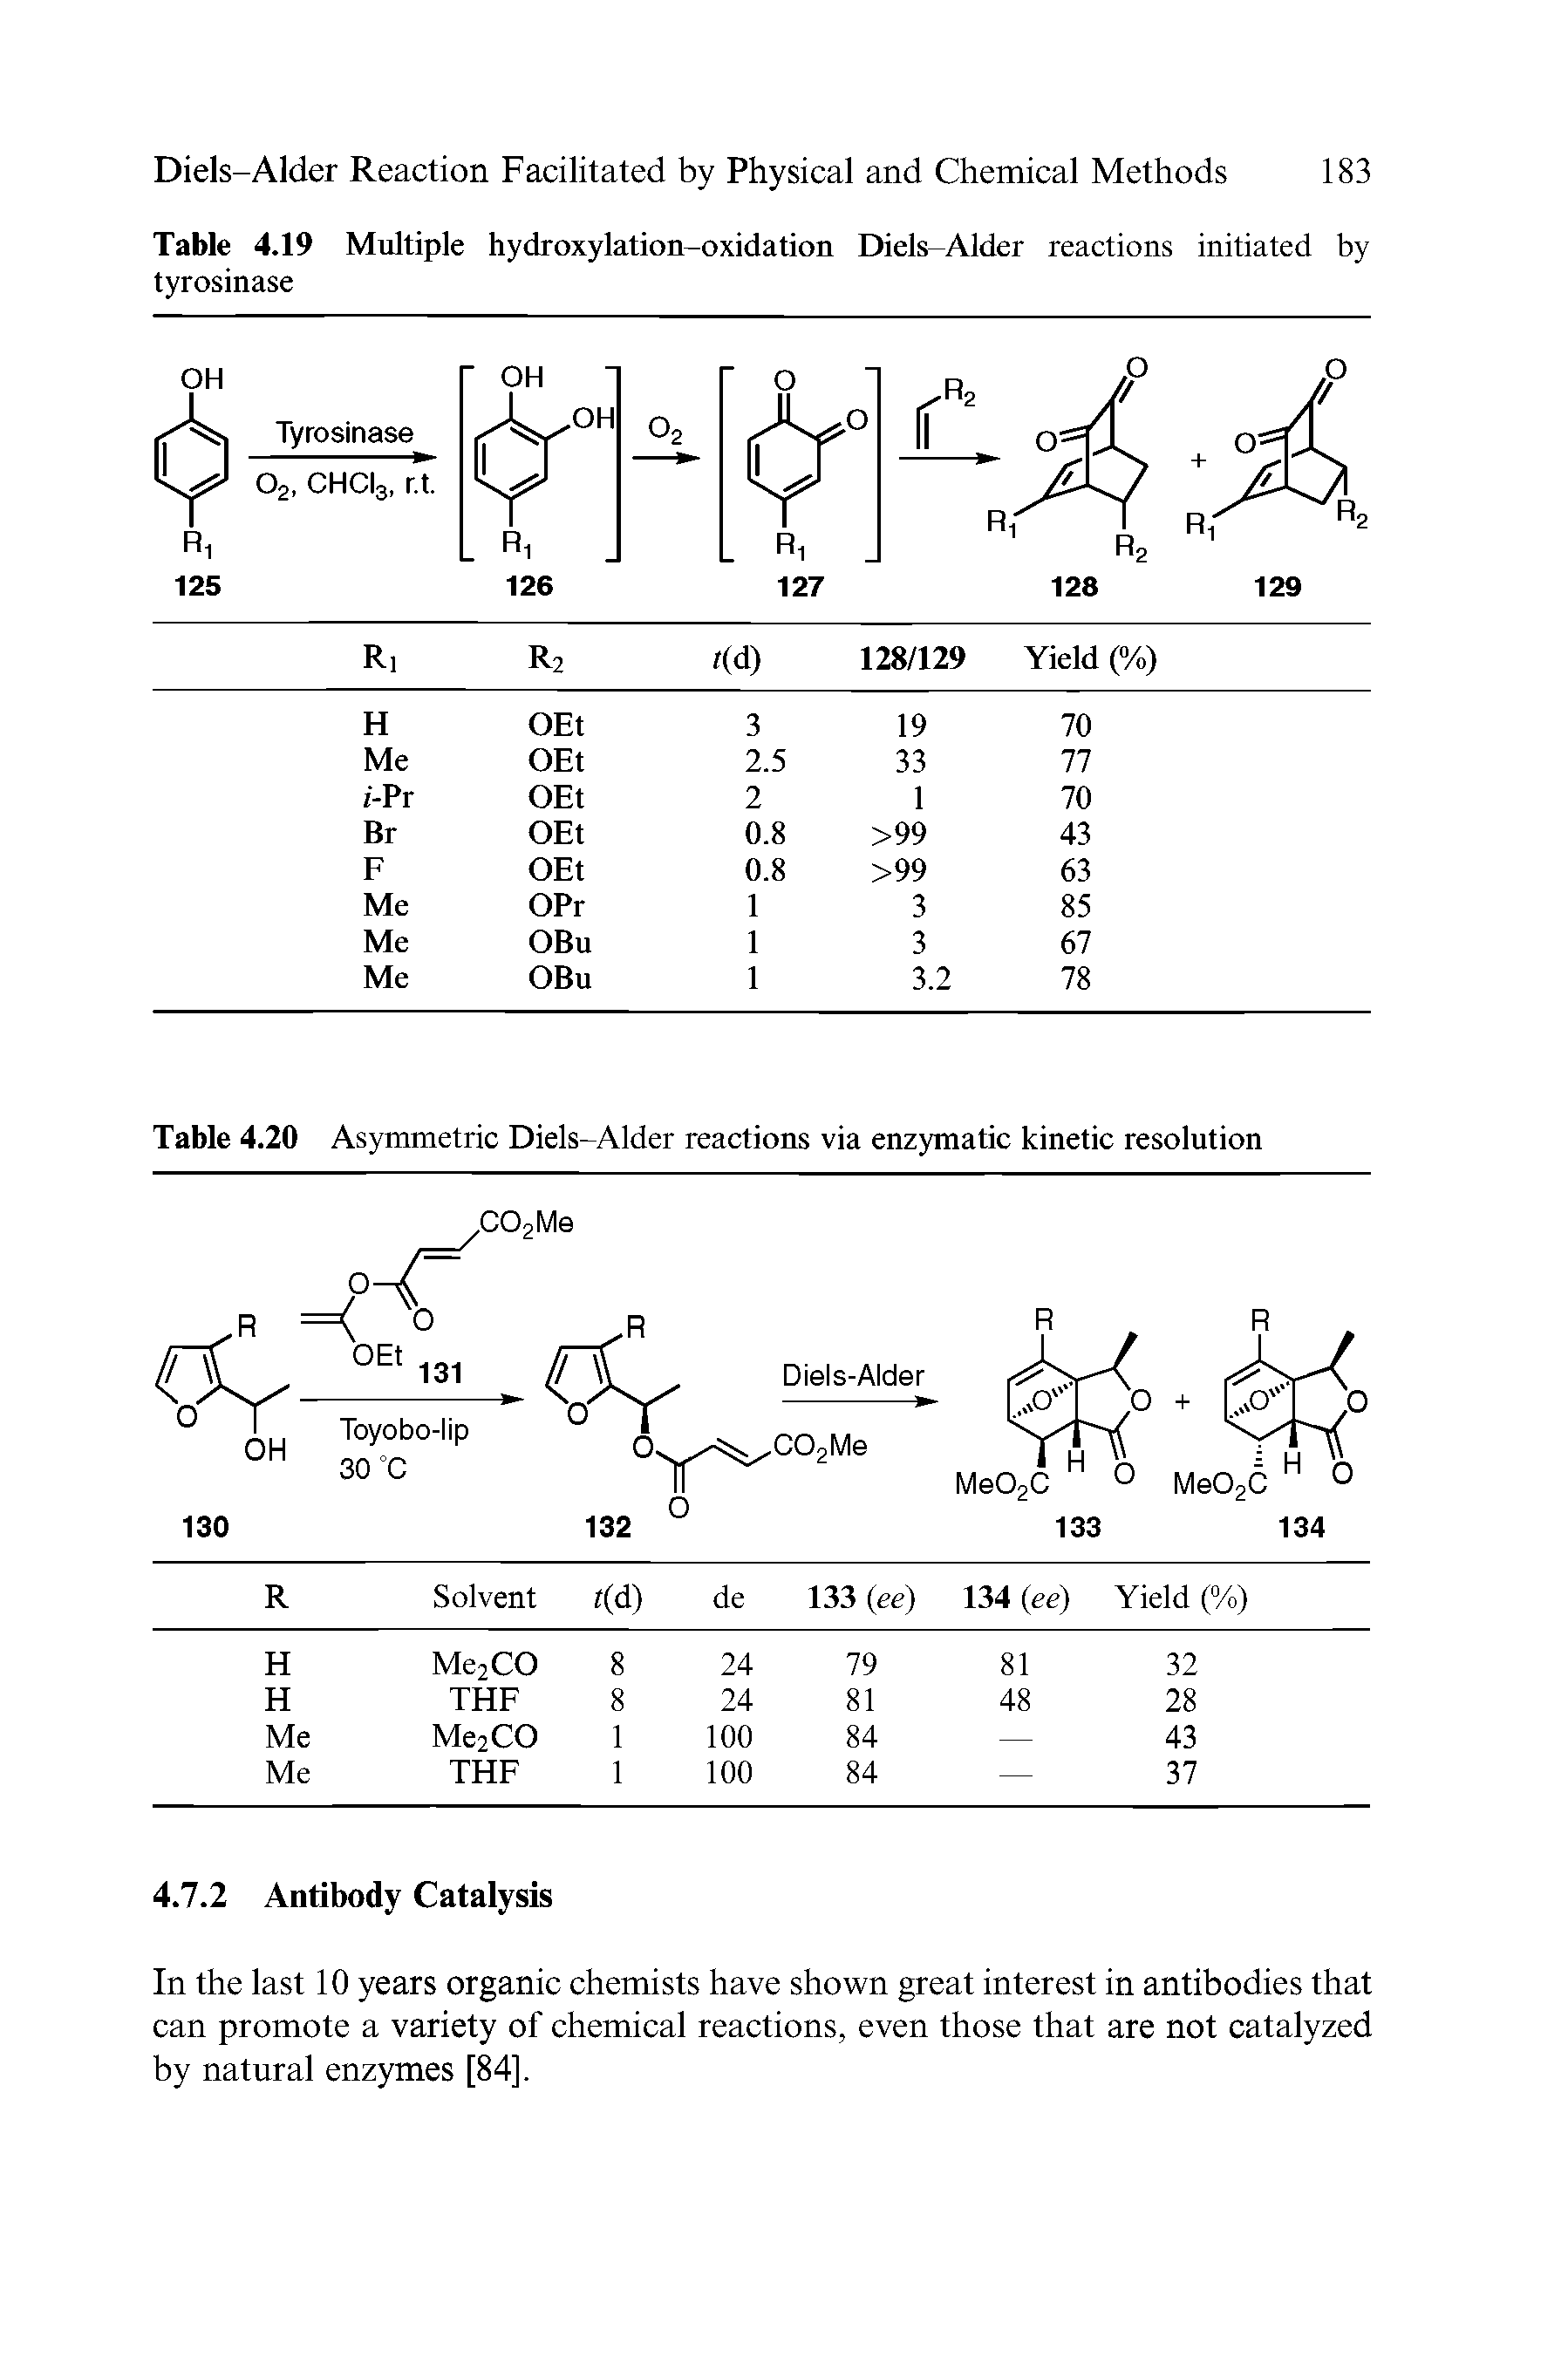 Table 4.20 Asymmetric Diels-Alder reactions via enzymatic kinetic resolution...